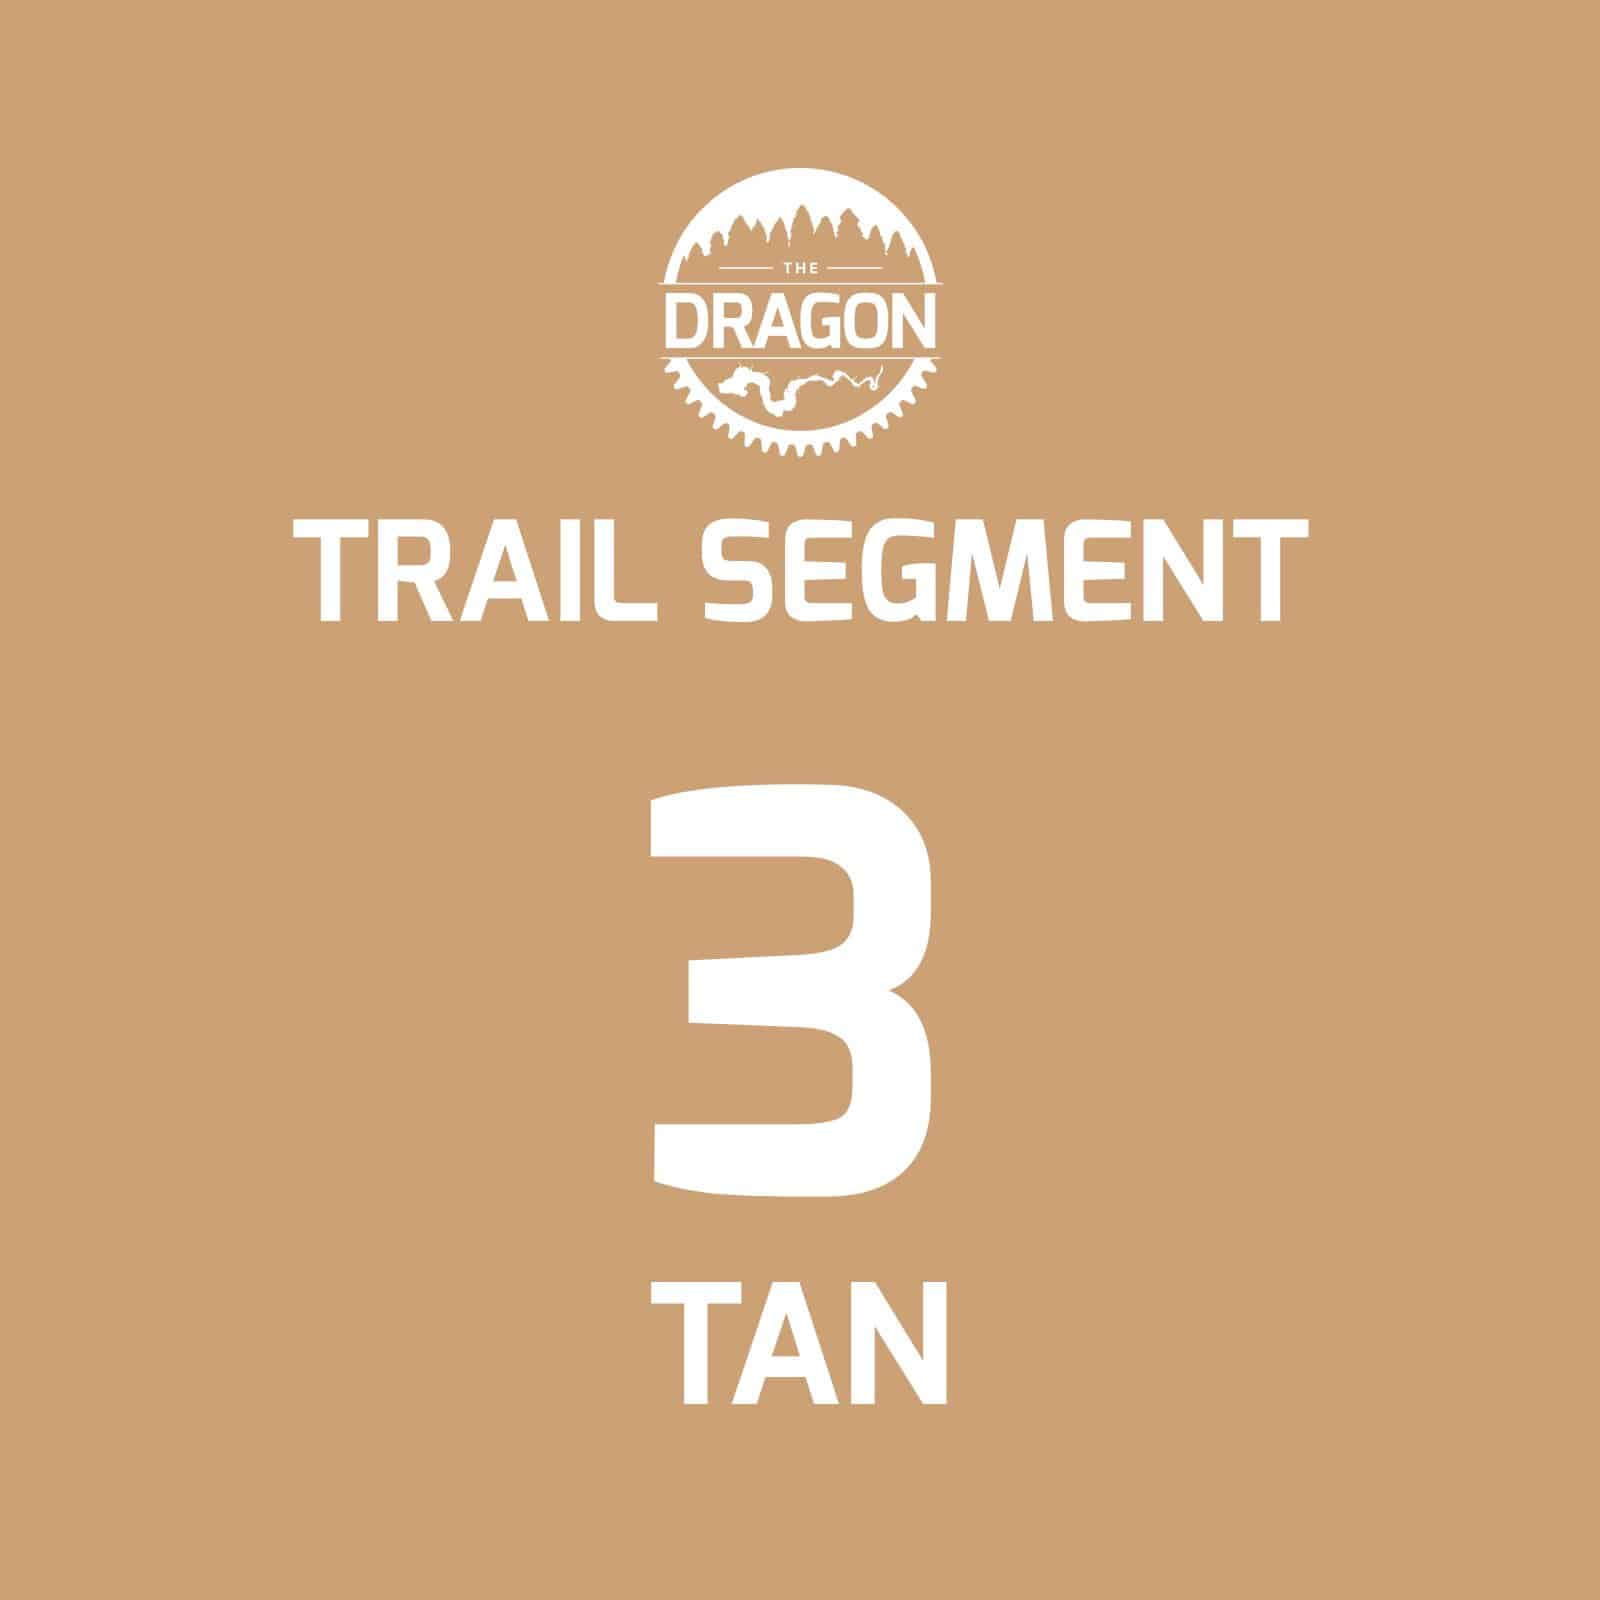 Dragon Trail